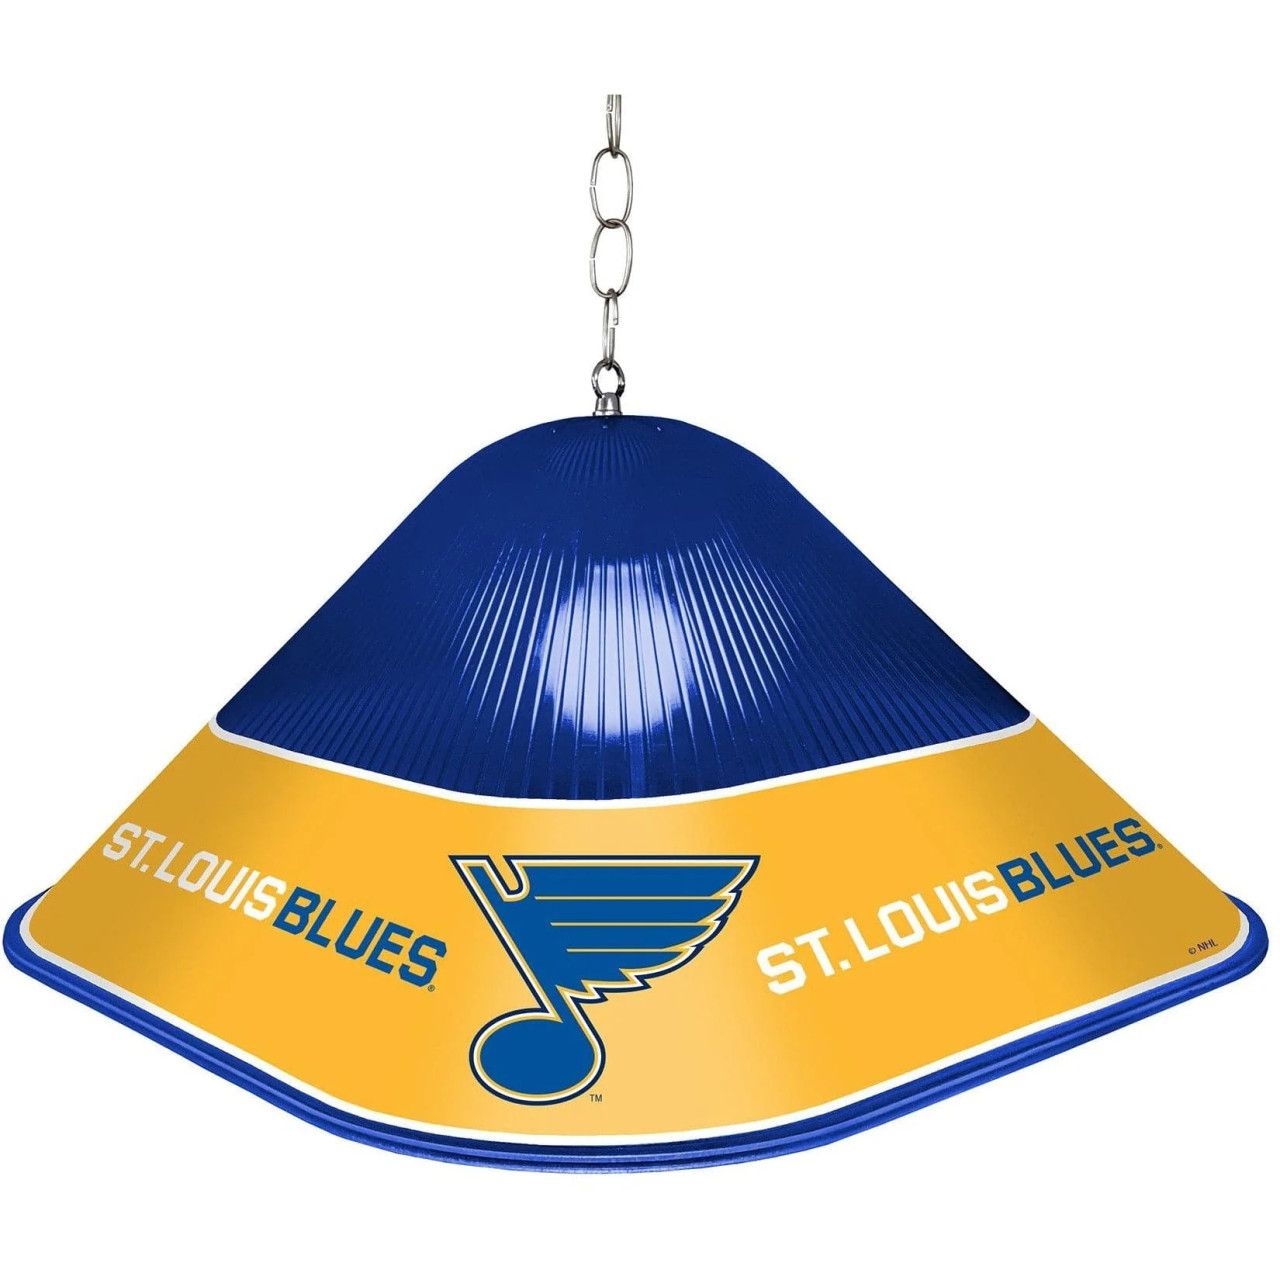 STL, St Louis, Blues, Game, Table, Light, Lamp, NHSTLB-410-01B, NHSTLB-410-01A, The Fan-Brand, NHL, 686878995534